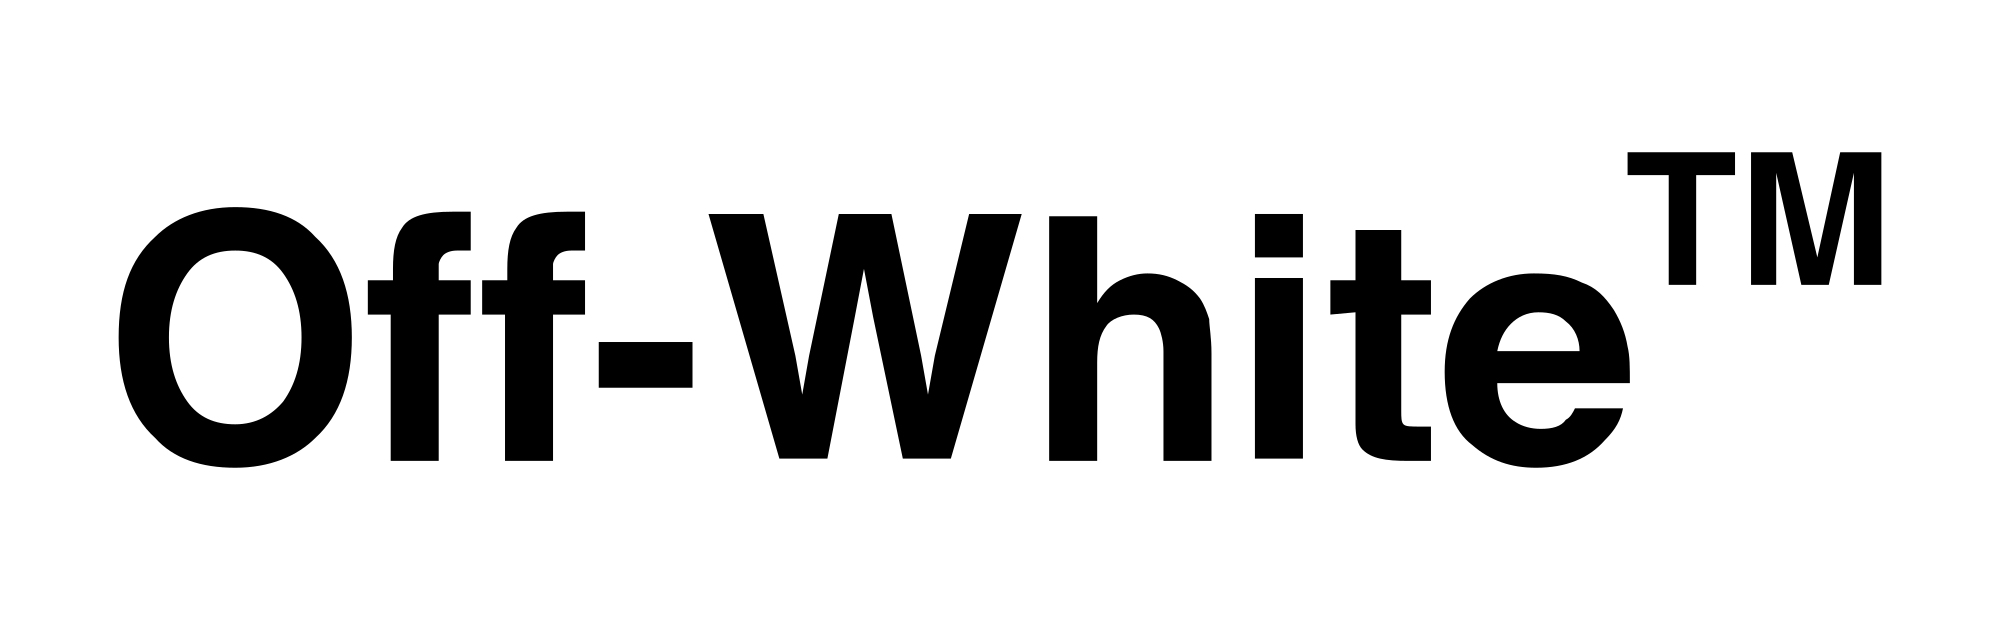 Off White Black Logo - Off white logo png 2 PNG Image